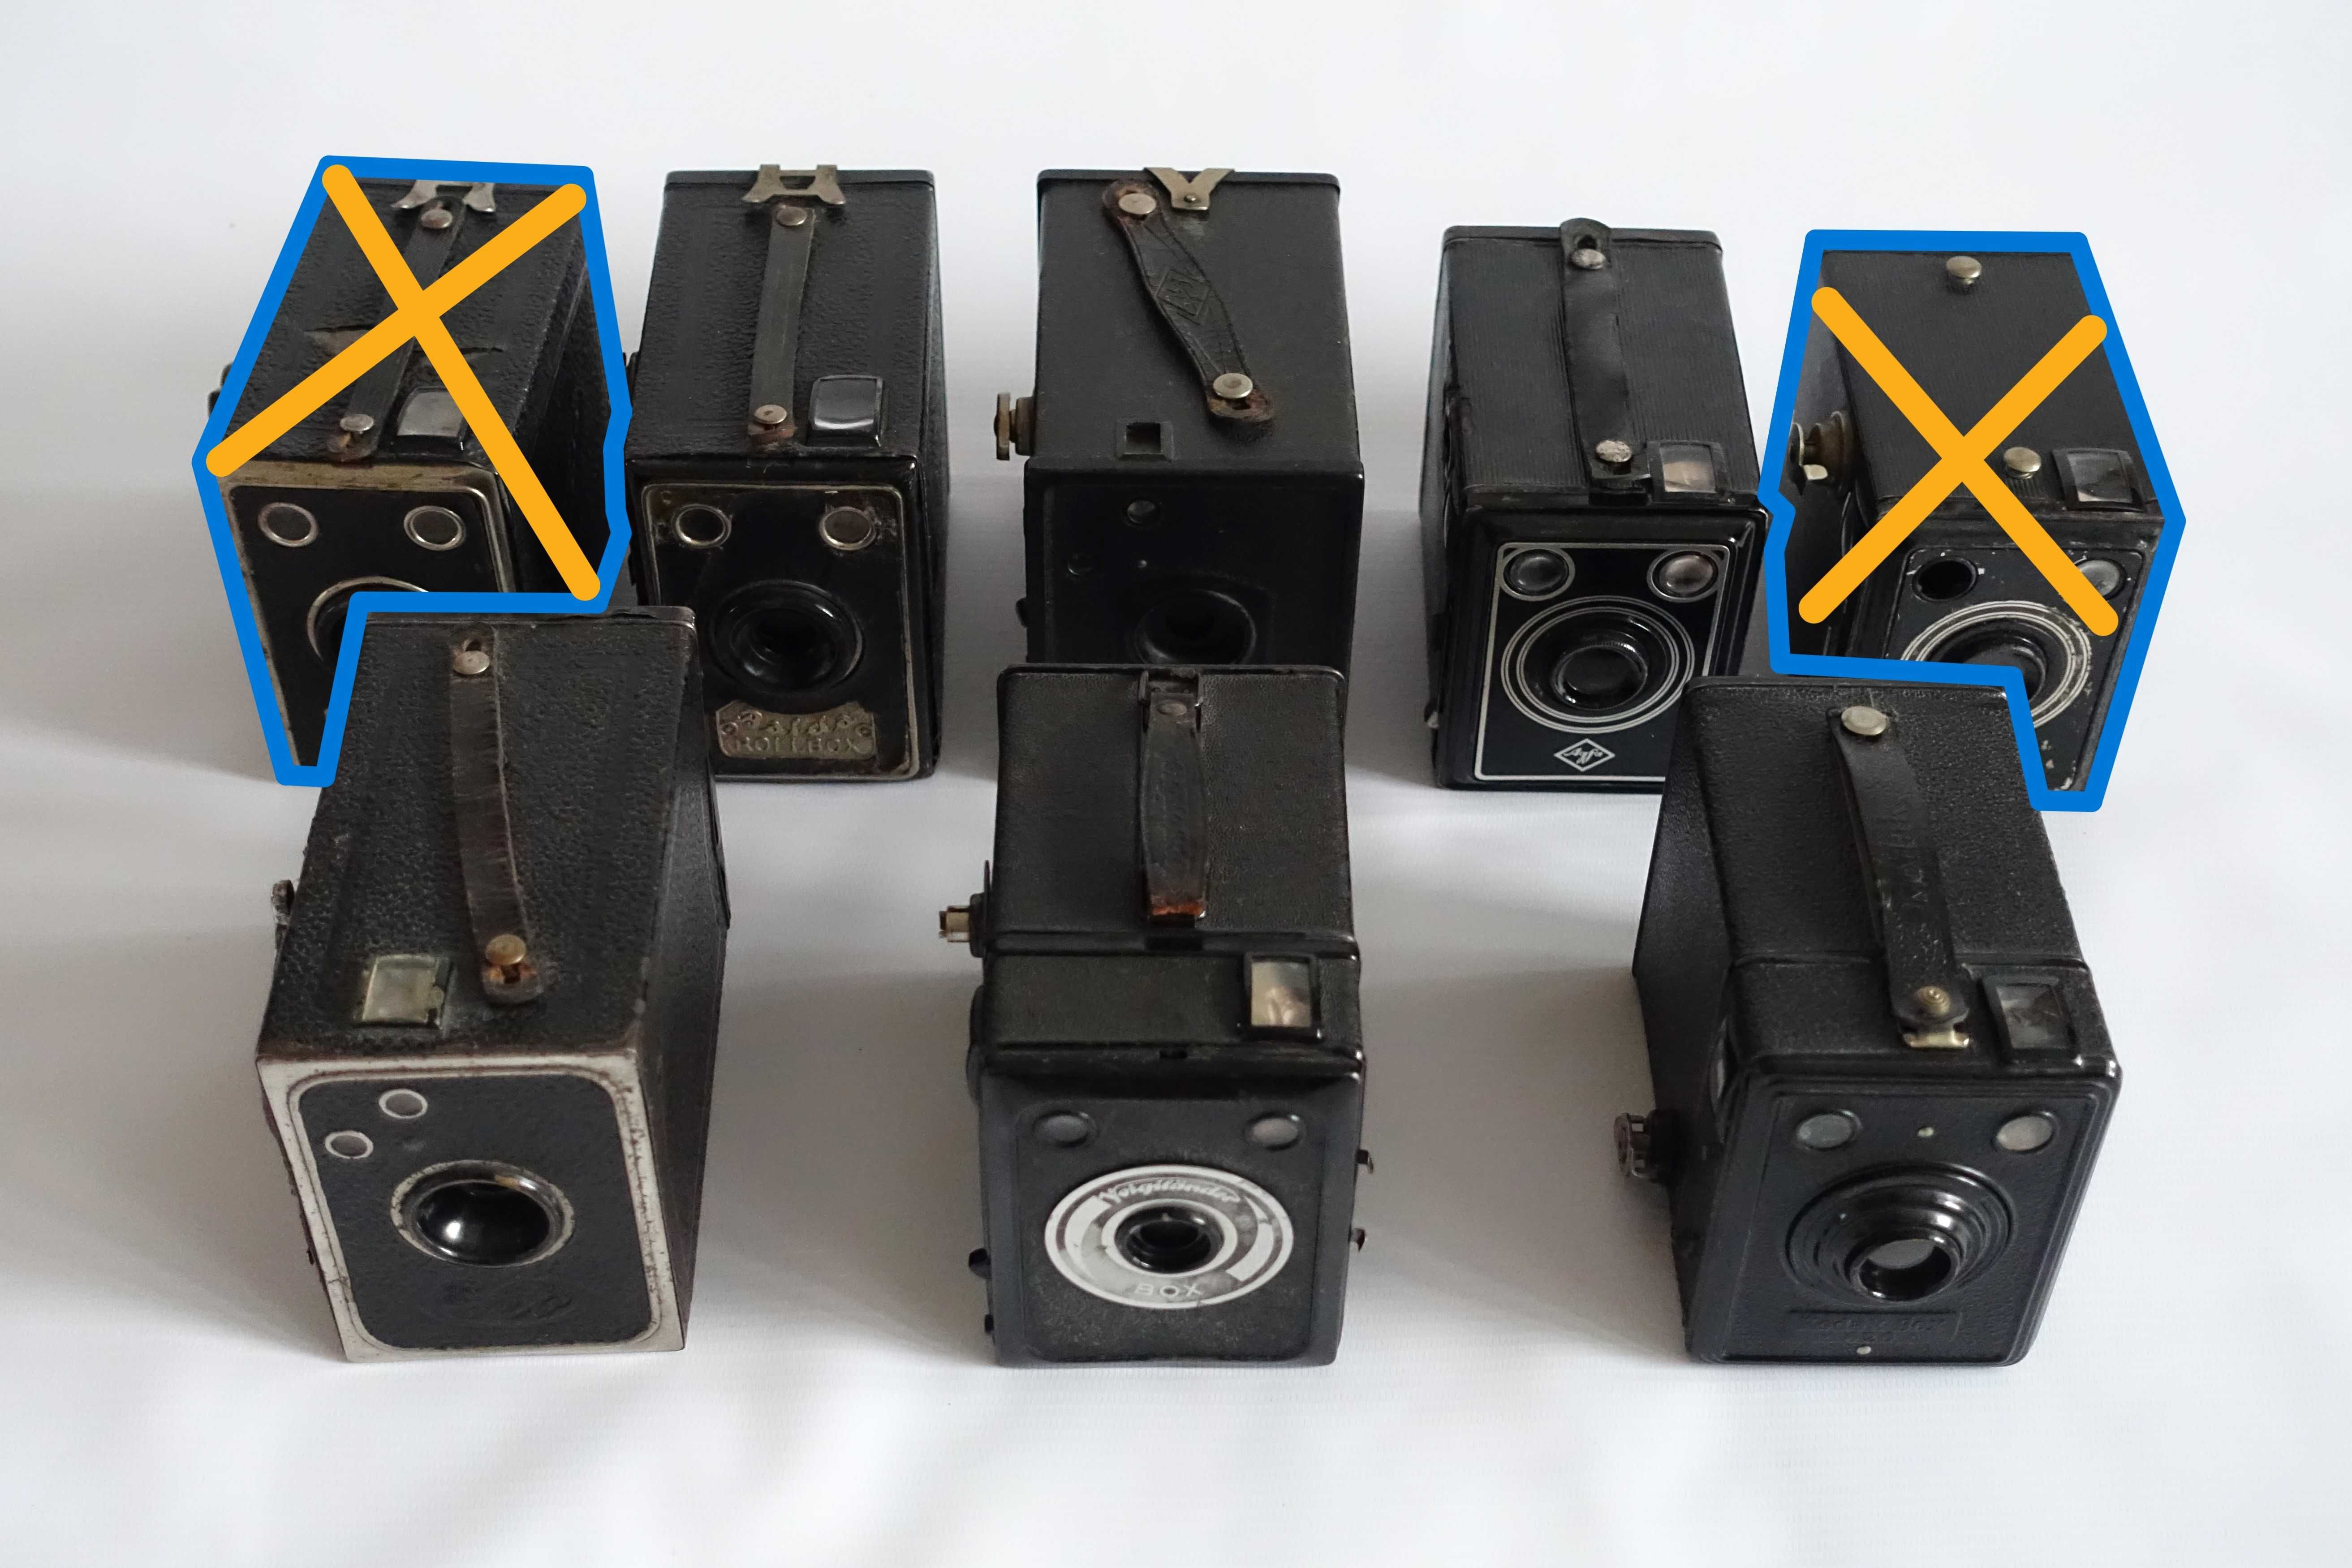 6 sztuk aparatów - Agfa, Voigtlander, Echo, Rollbox, Kodak + Inne